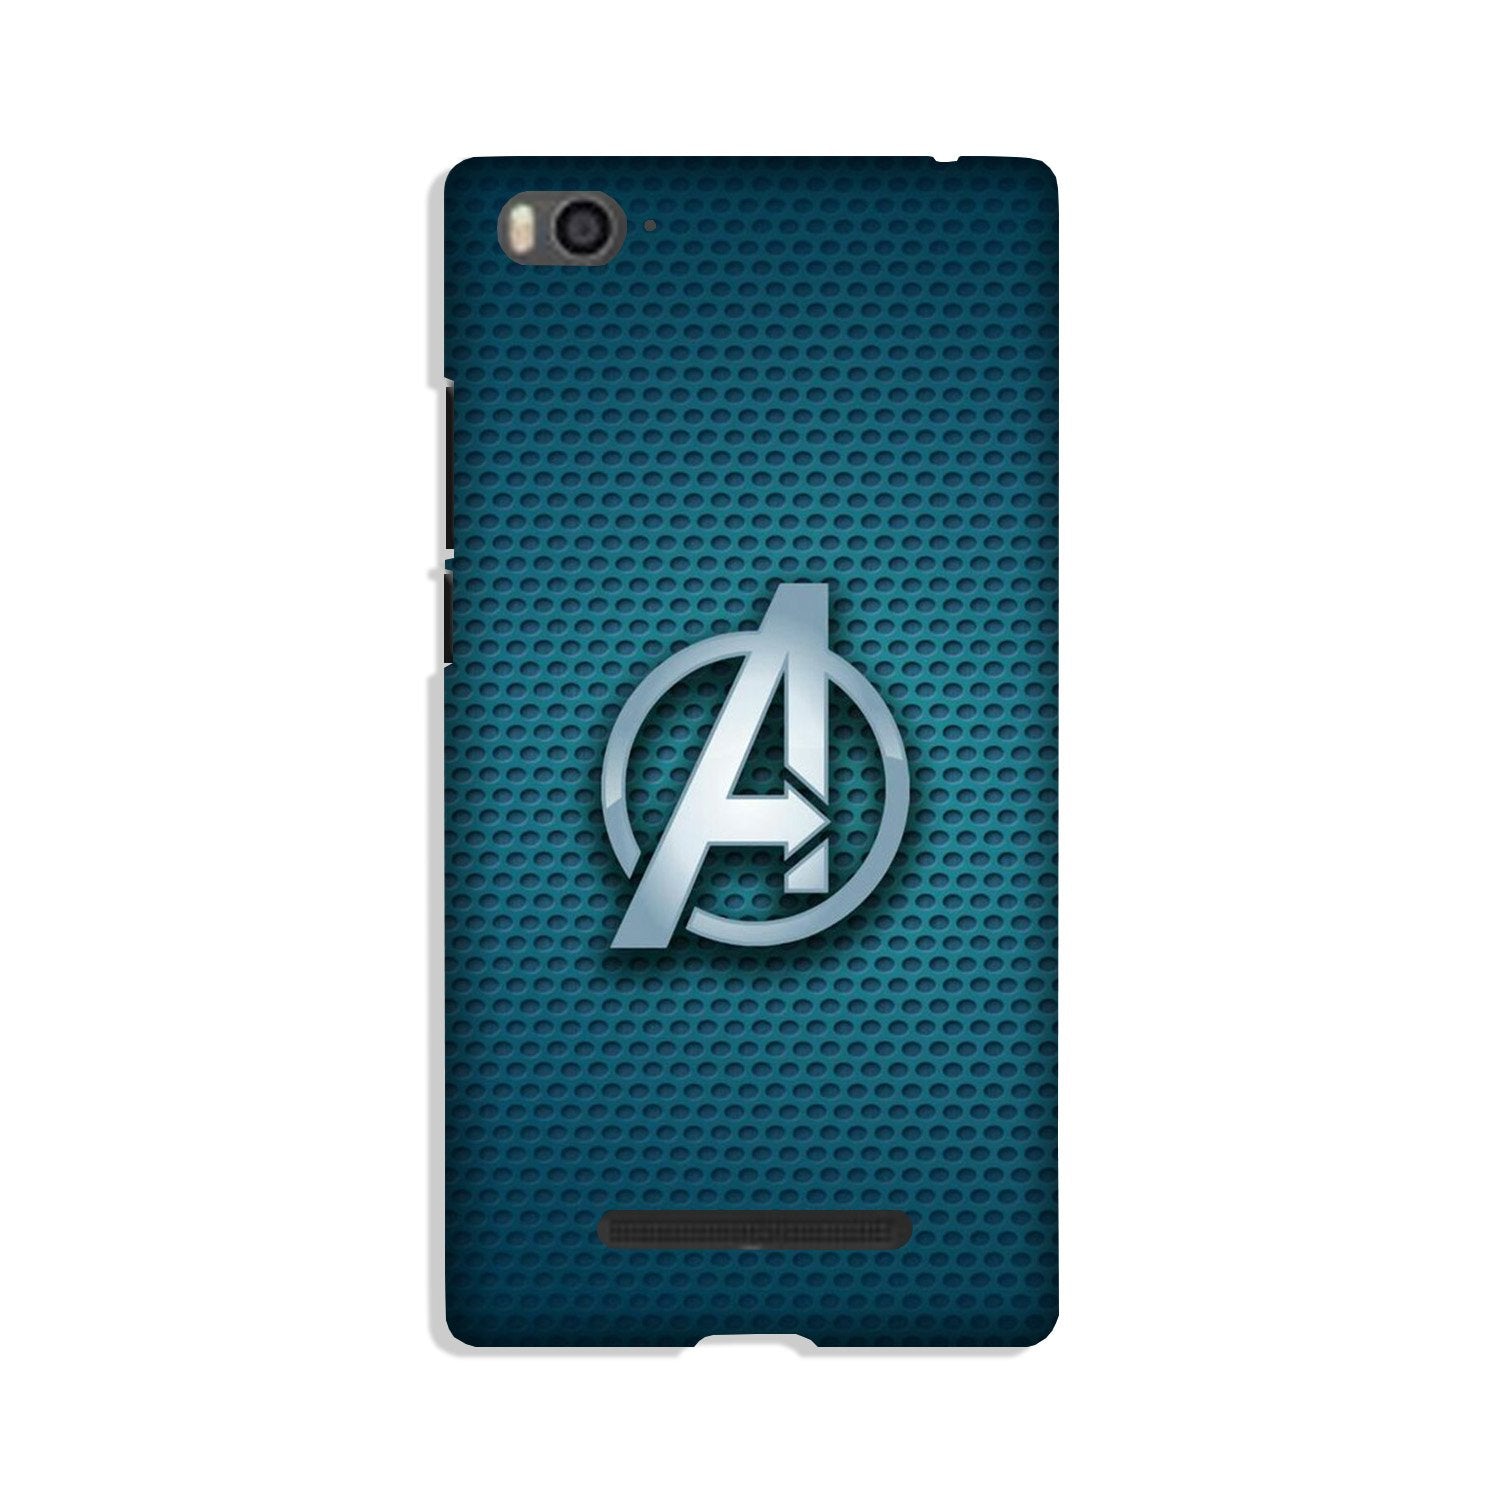 Avengers Case for Xiaomi Redmi 5A (Design No. 246)